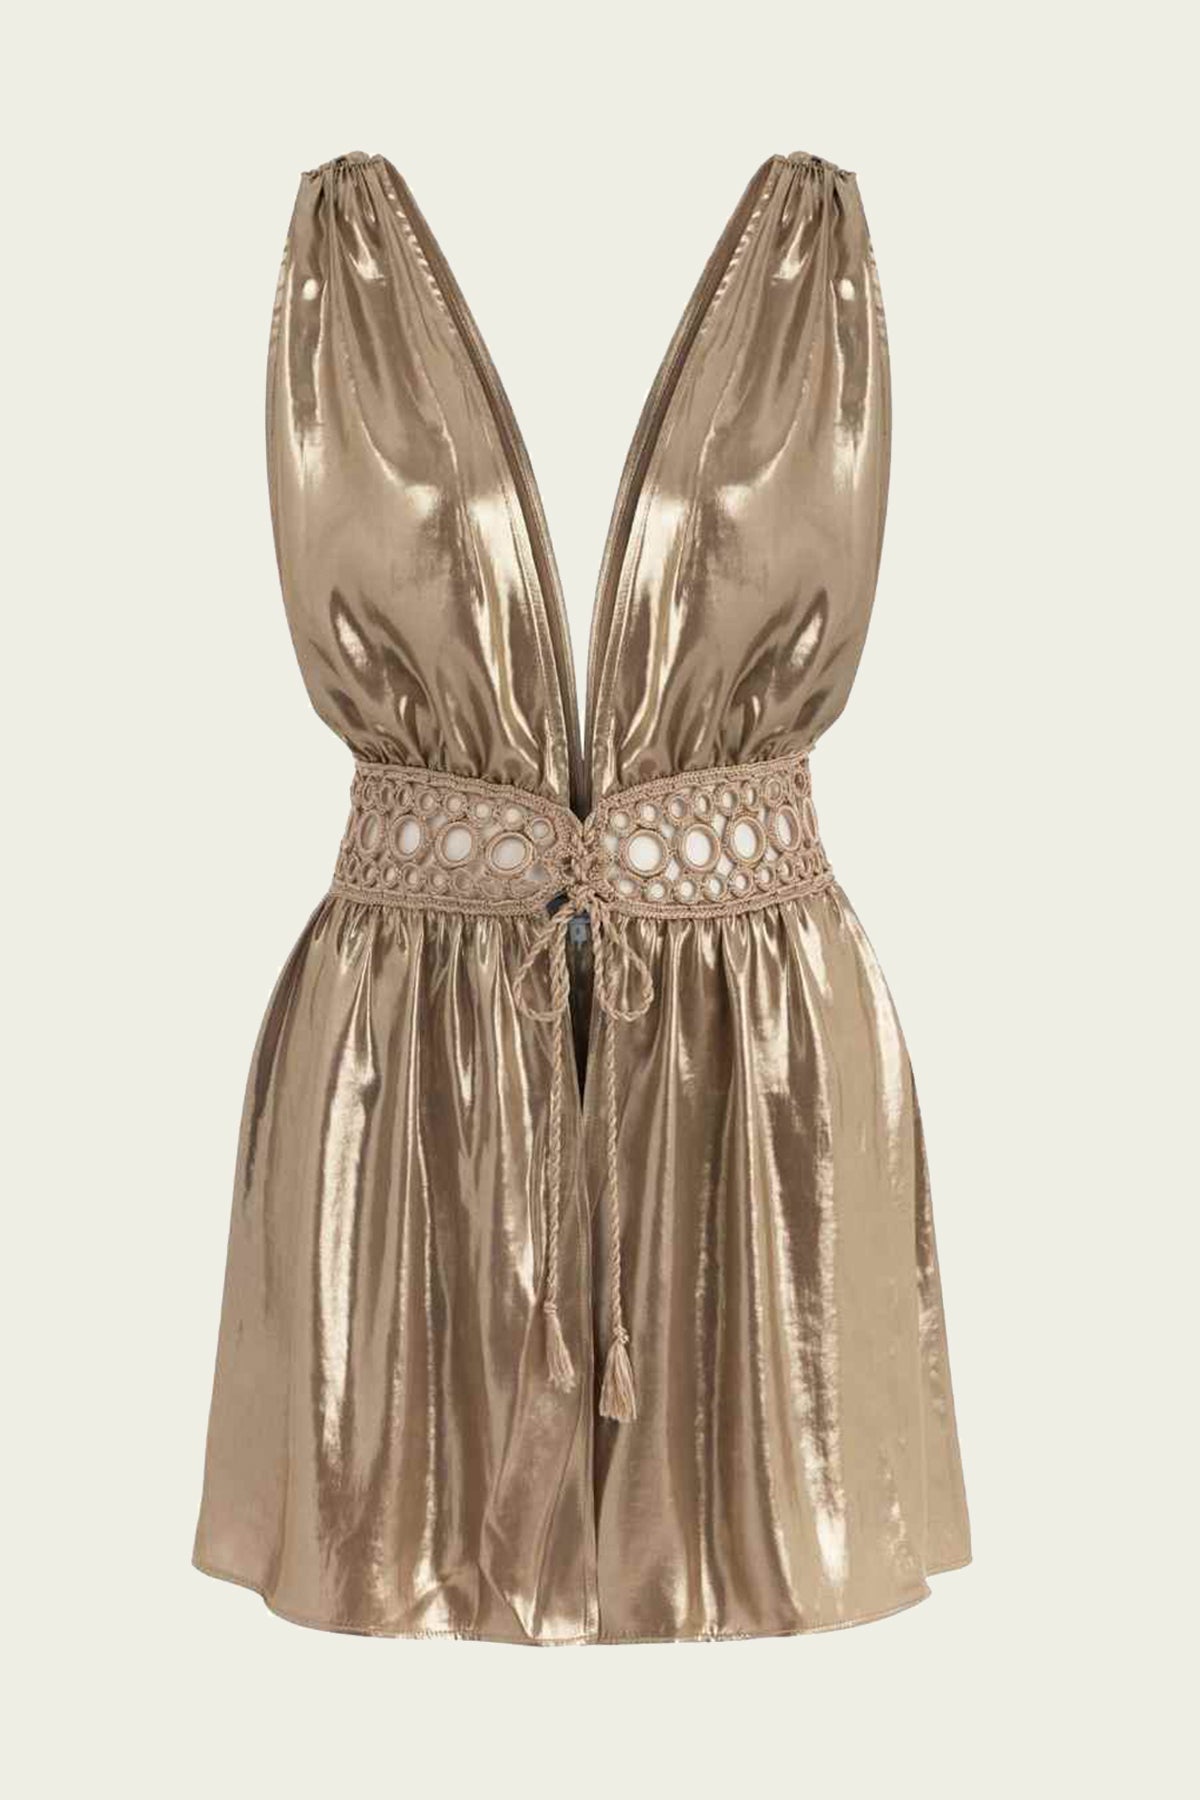 Charlotte Bronze Shimmer Mini Dress in Bronze Shimmer - shop-olivia.com